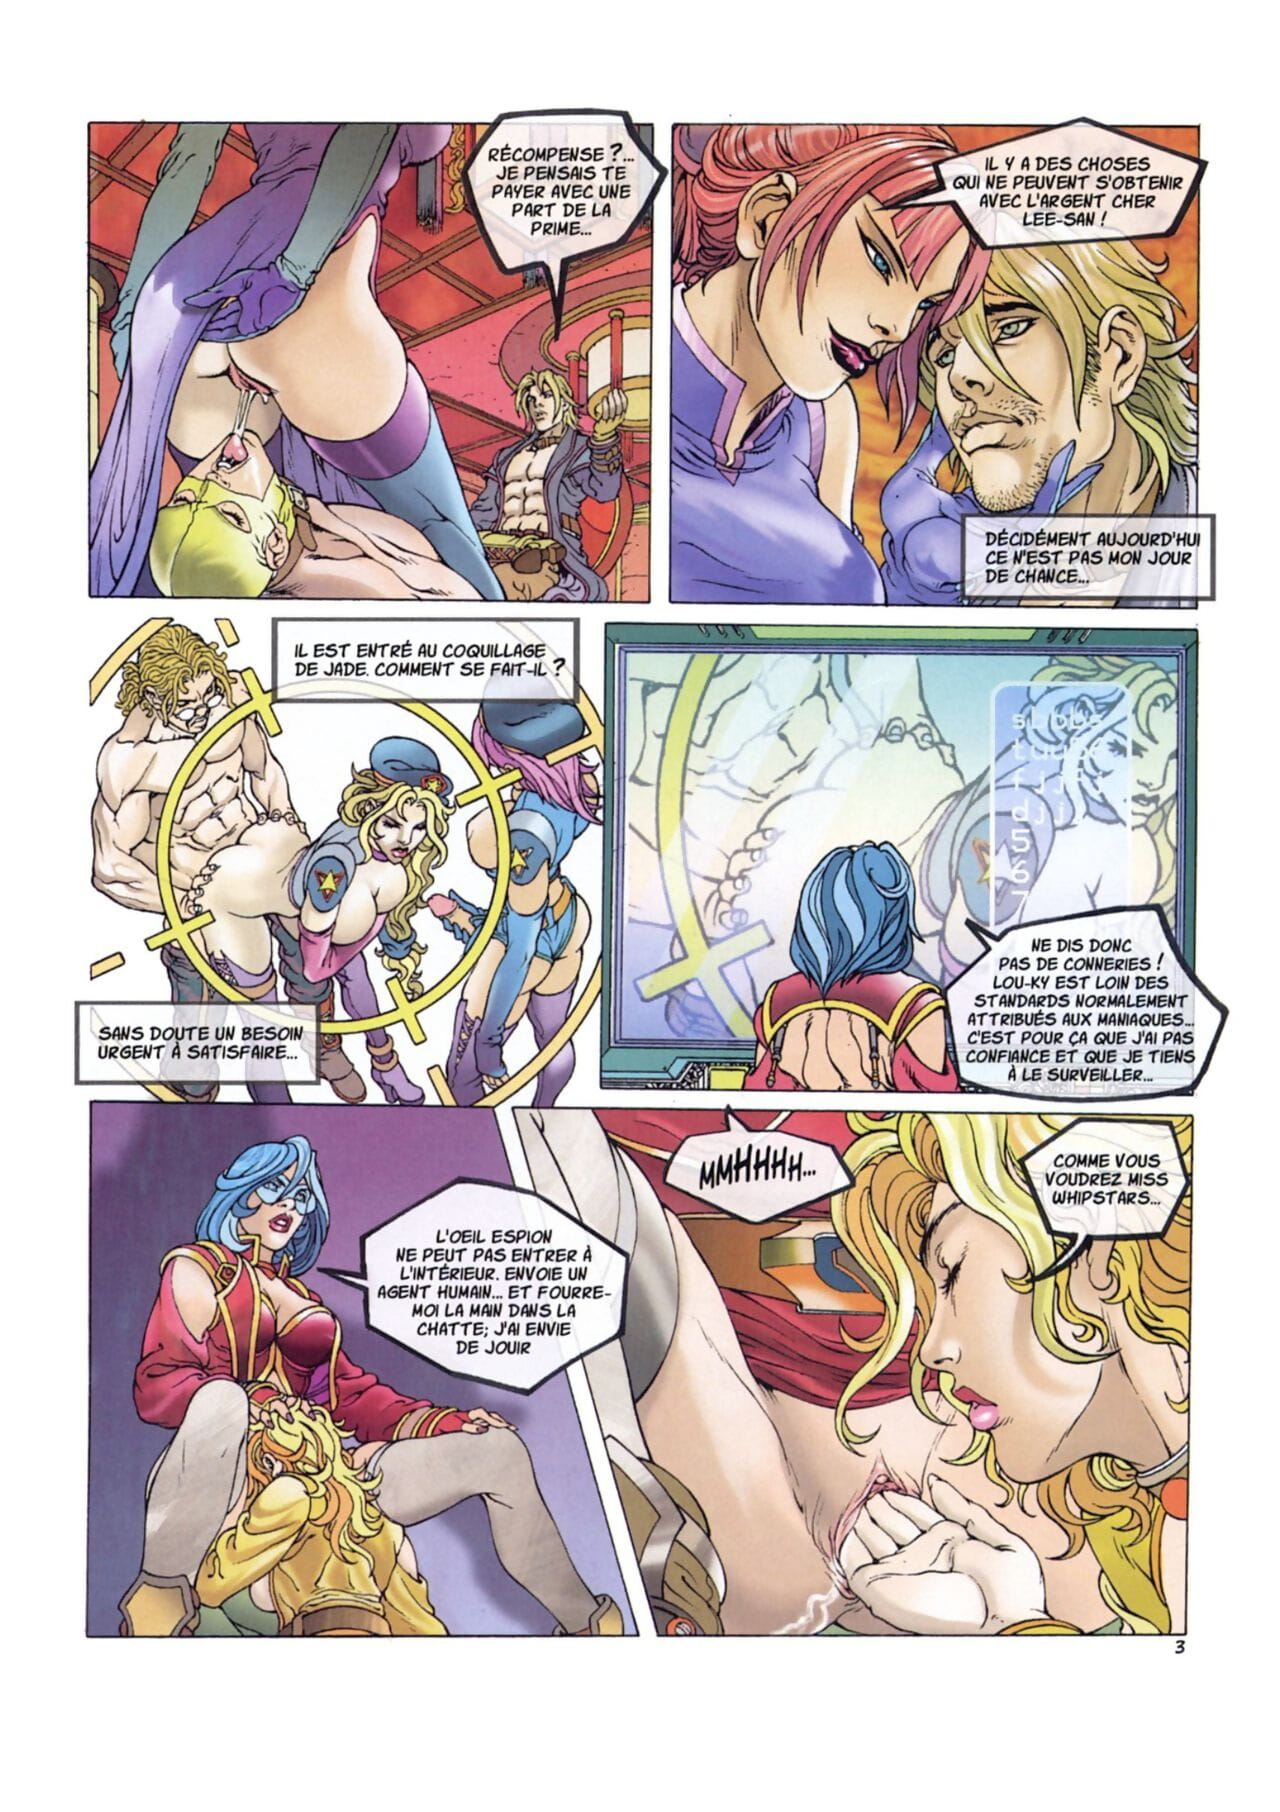 Sexy cyborg page 1